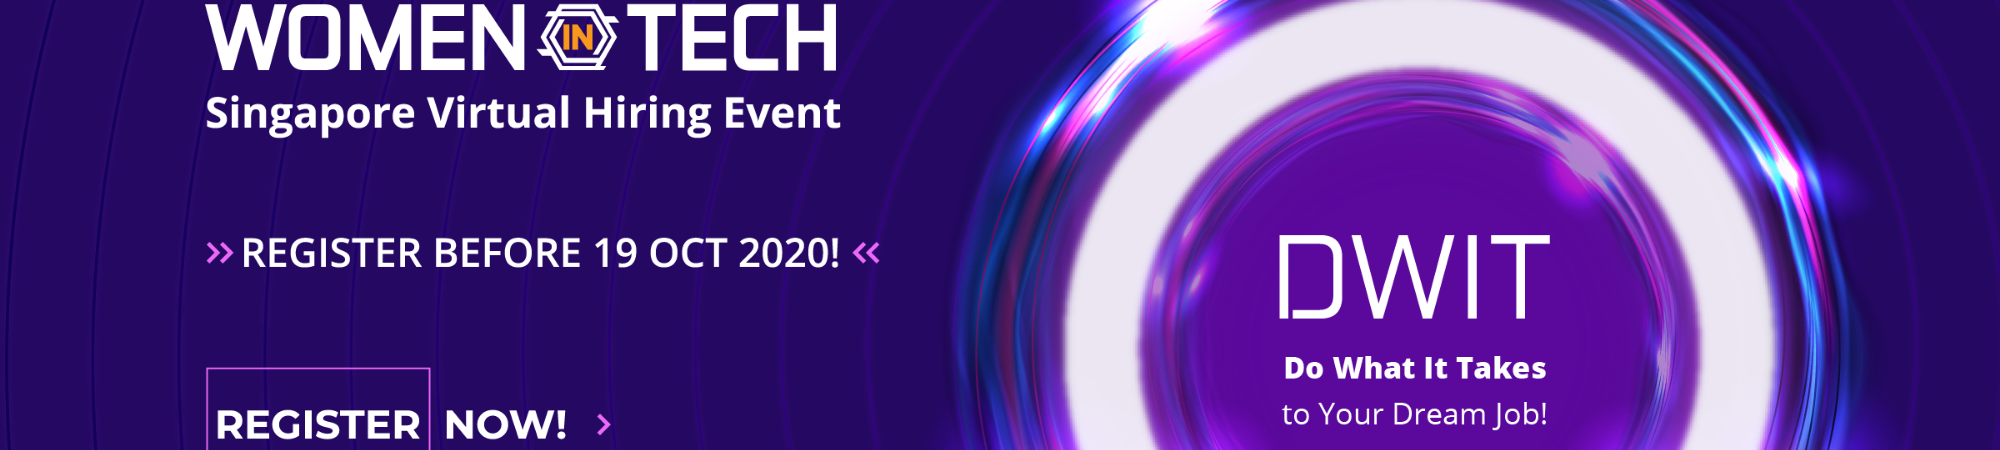 Hts Platform Event Banner 2000 X 800 (17)